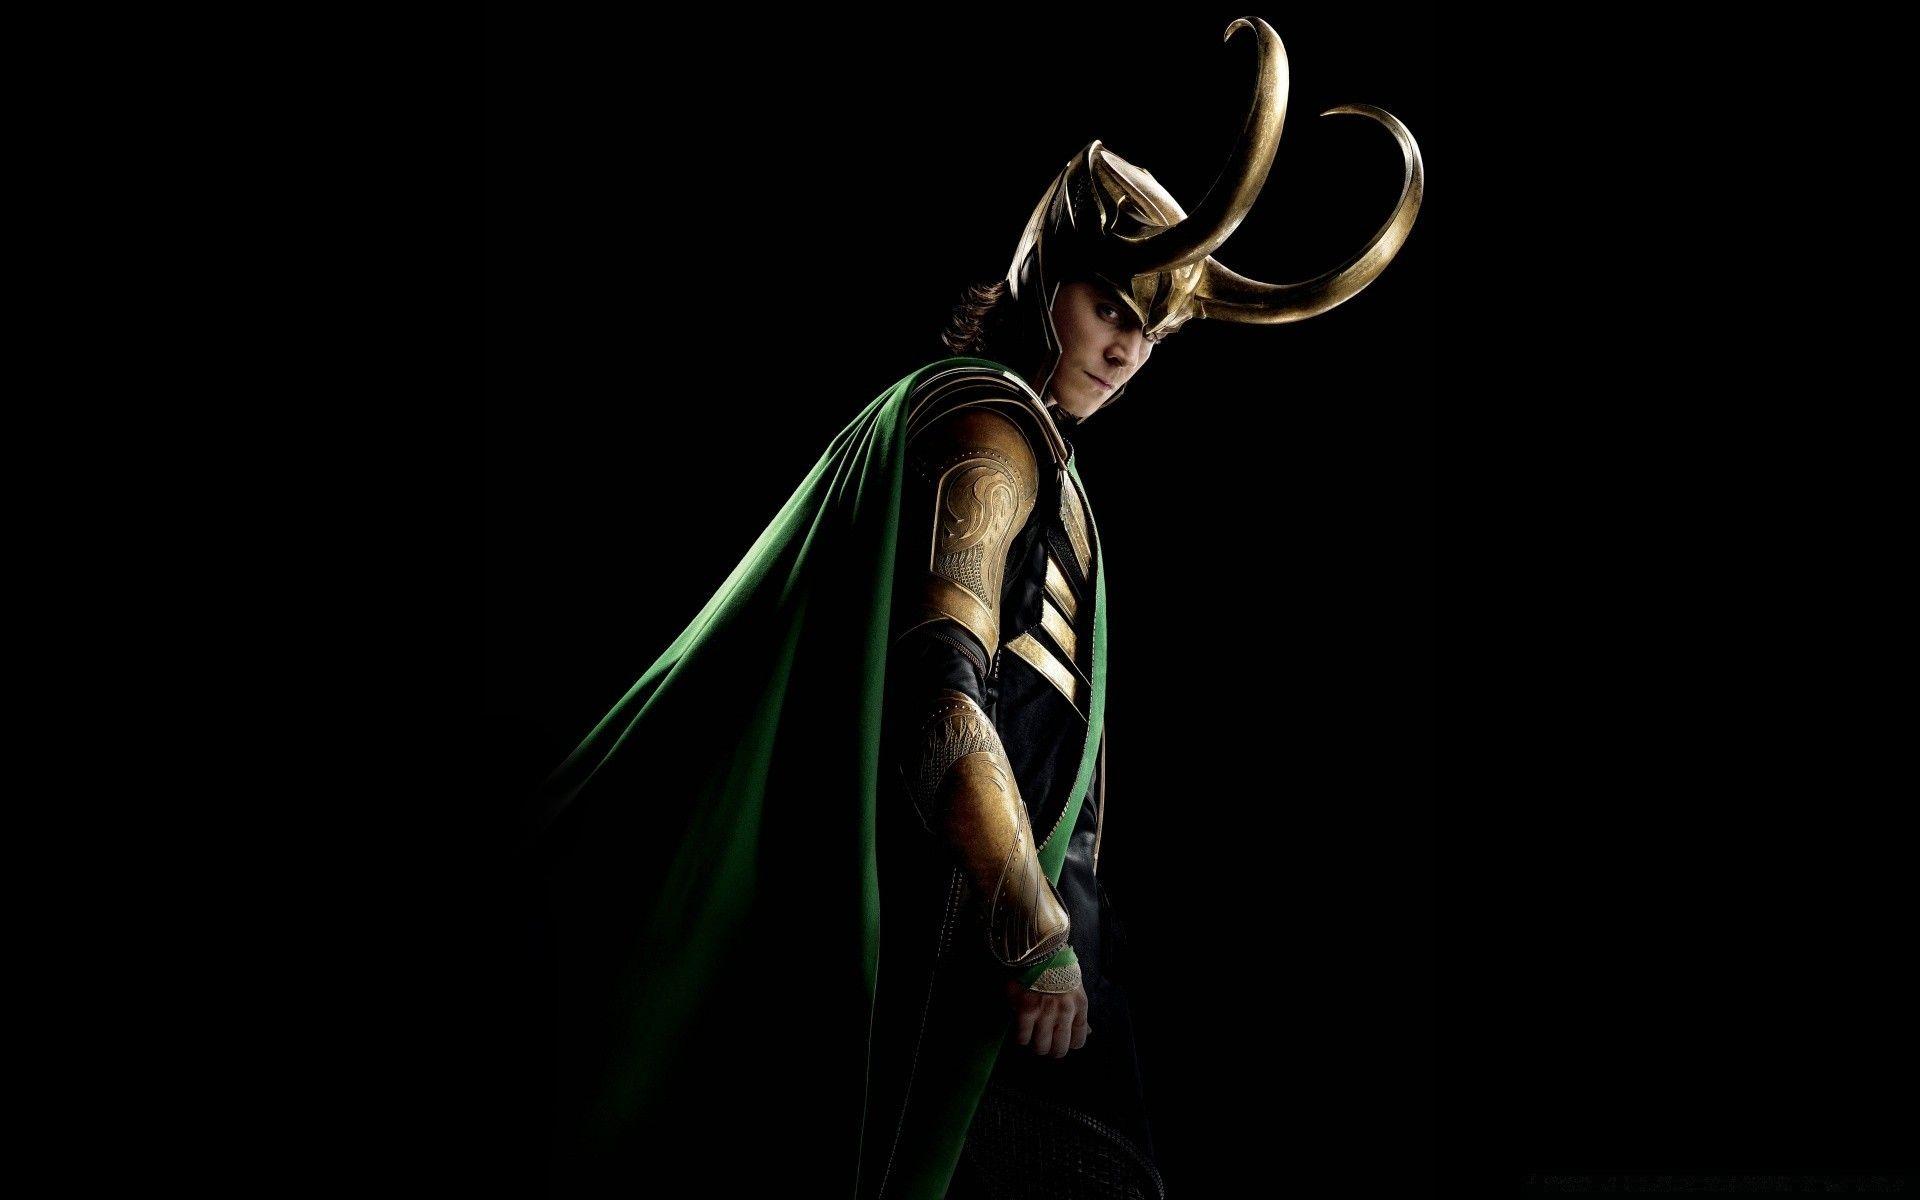 Thor The Dark World Tom Hiddleston as Loki. Android wallpaper for free